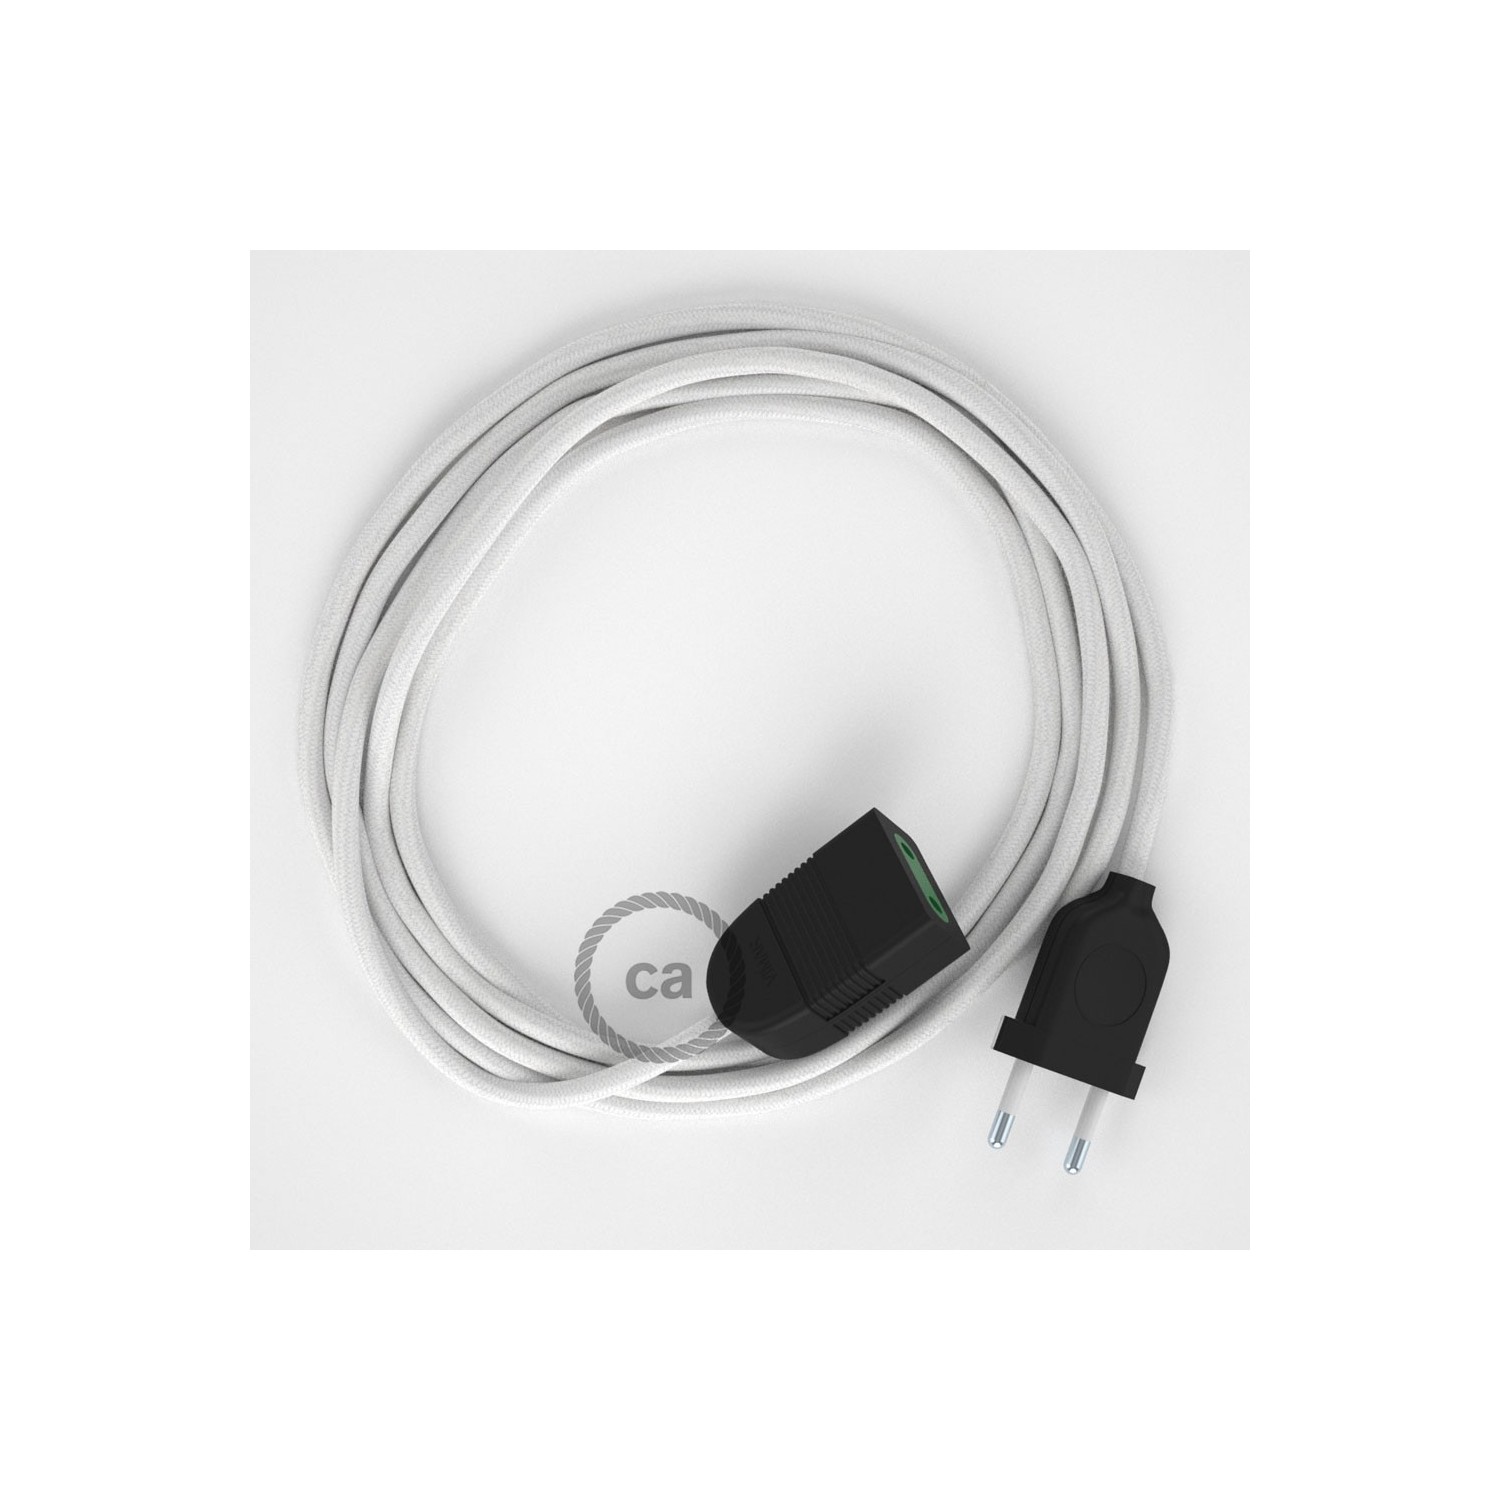 Produžni kabel za napajanje (2P 10A) Bijeli Pamuk RC01 - Made in Italy